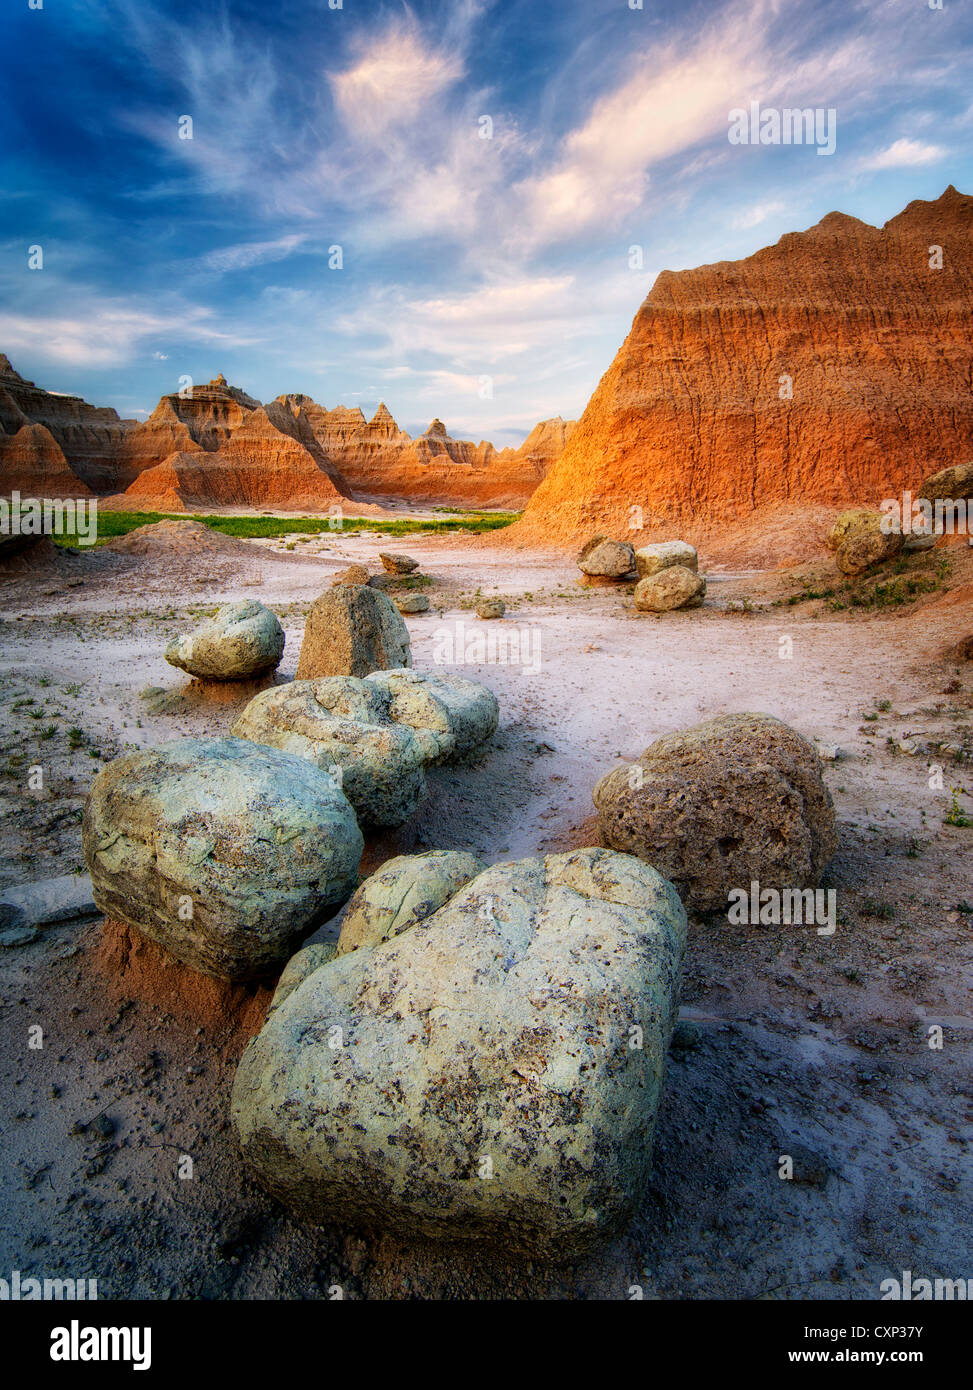 Large boulders and rock formations at sunrise. Badlands National Park, South Dakota. Stock Photo